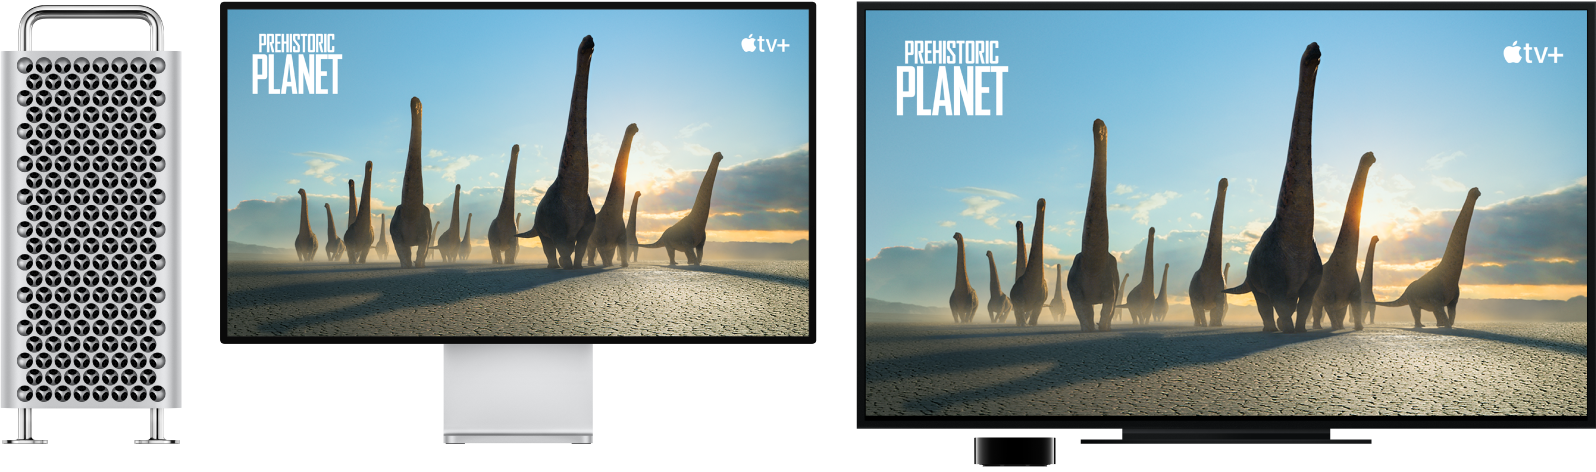 Mac Pro 内容通过 Apple TV 镜像到大的 HDTV 上。